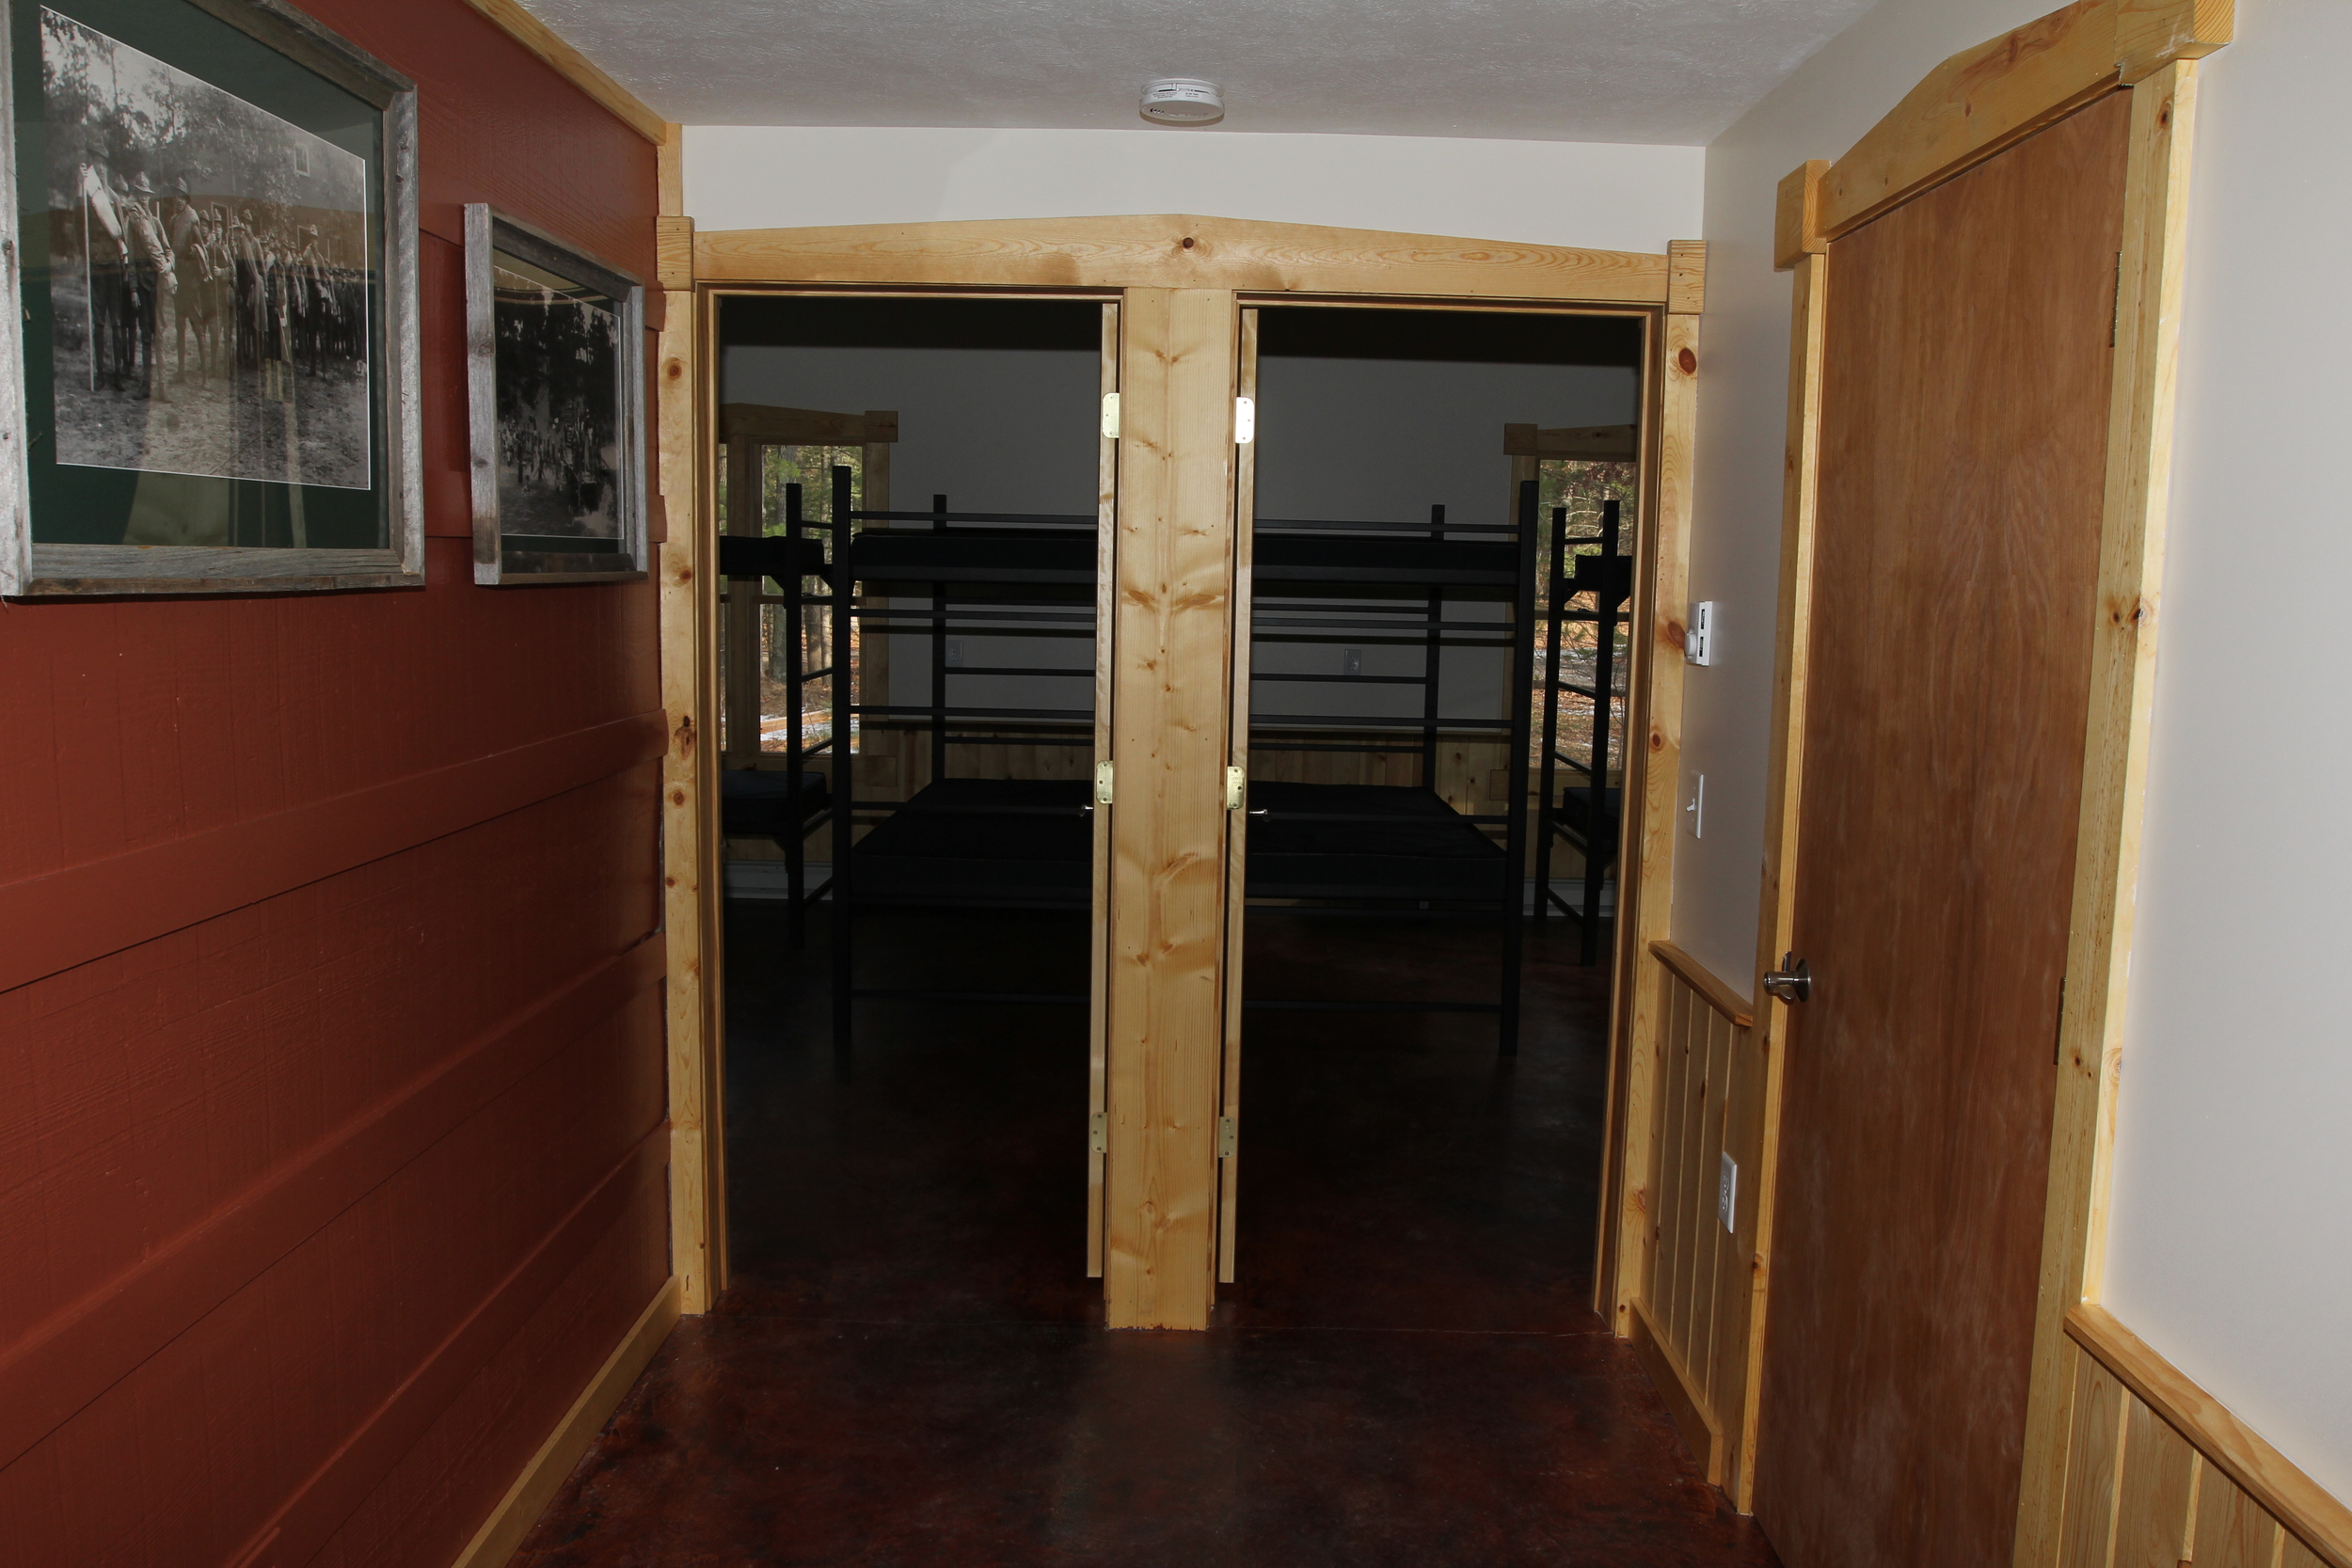 Guest Lodge Bunk Rooms